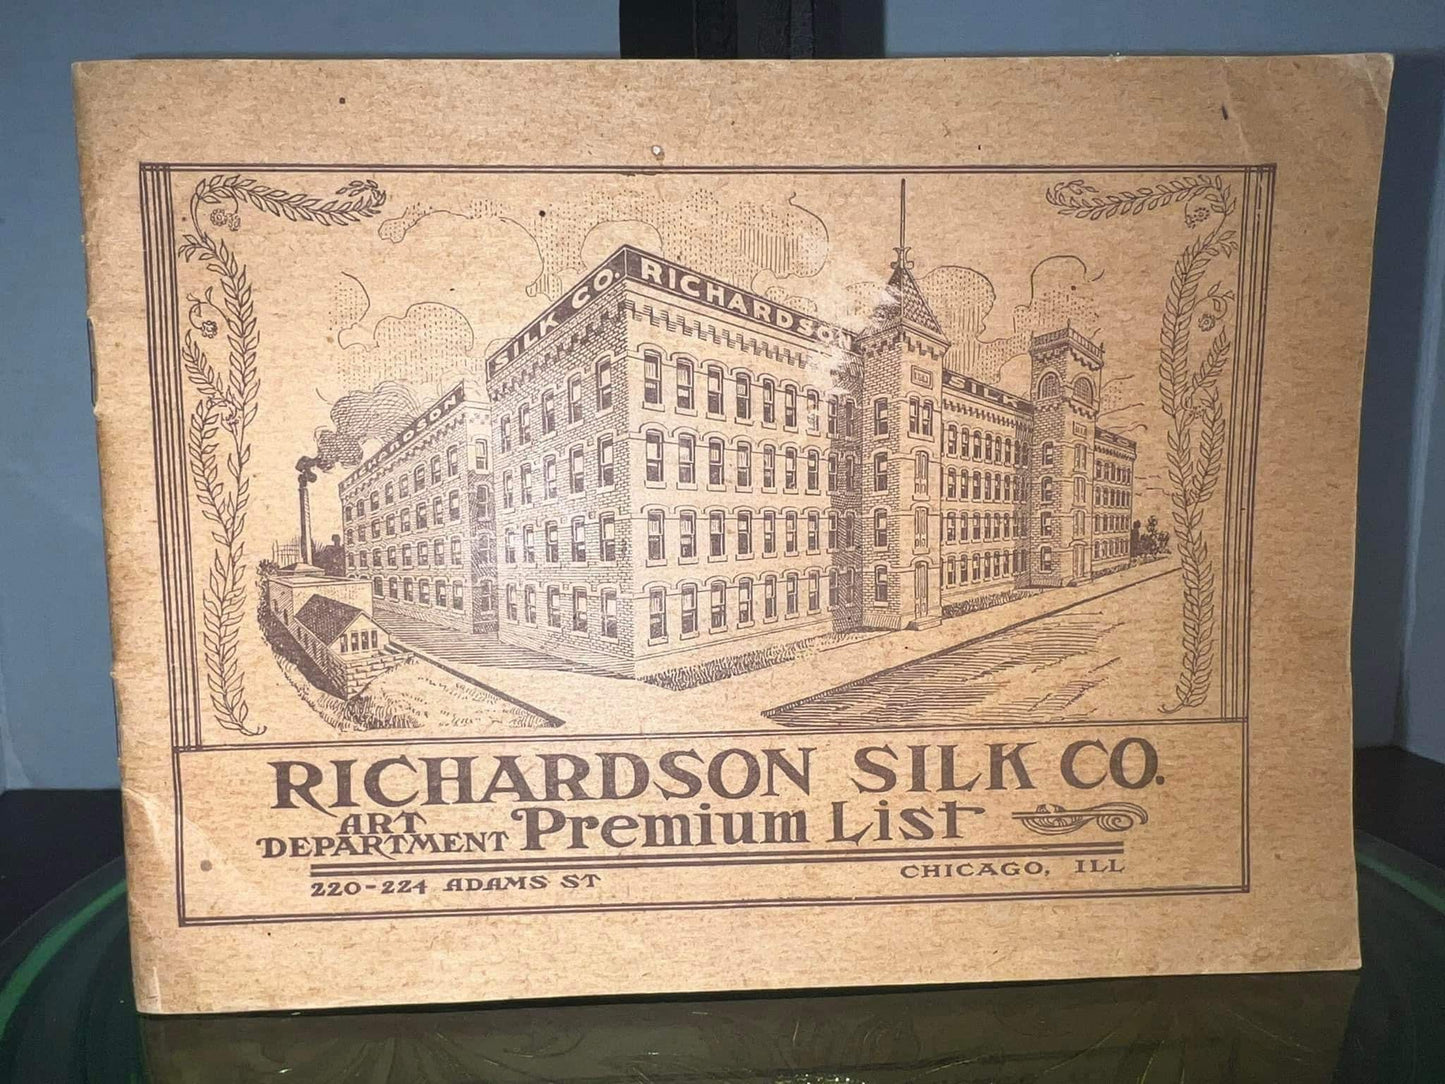 Antique 1900s catalog Richardsons silk co - Art department premium list illustrated sewing textile